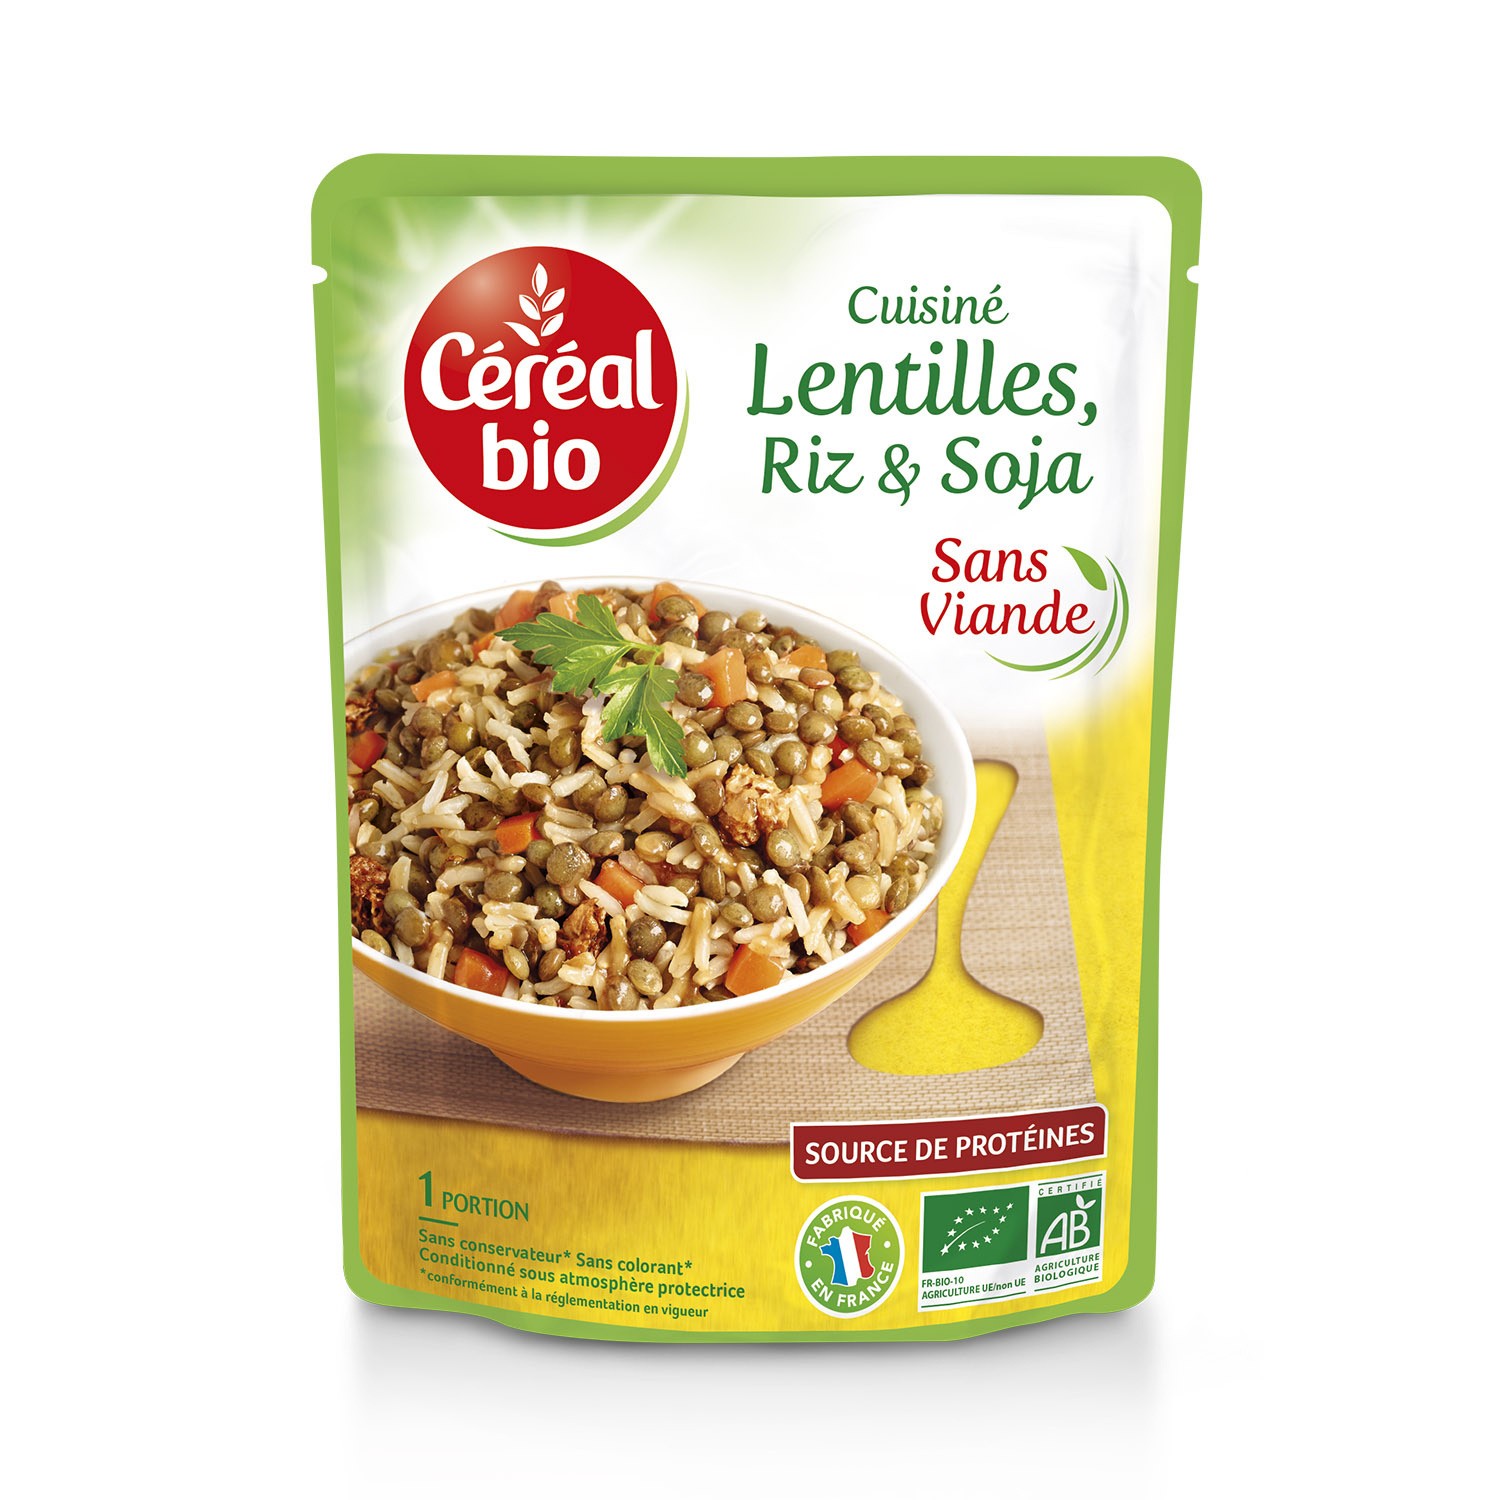 Cuisiné Lentilles, Riz & Soja